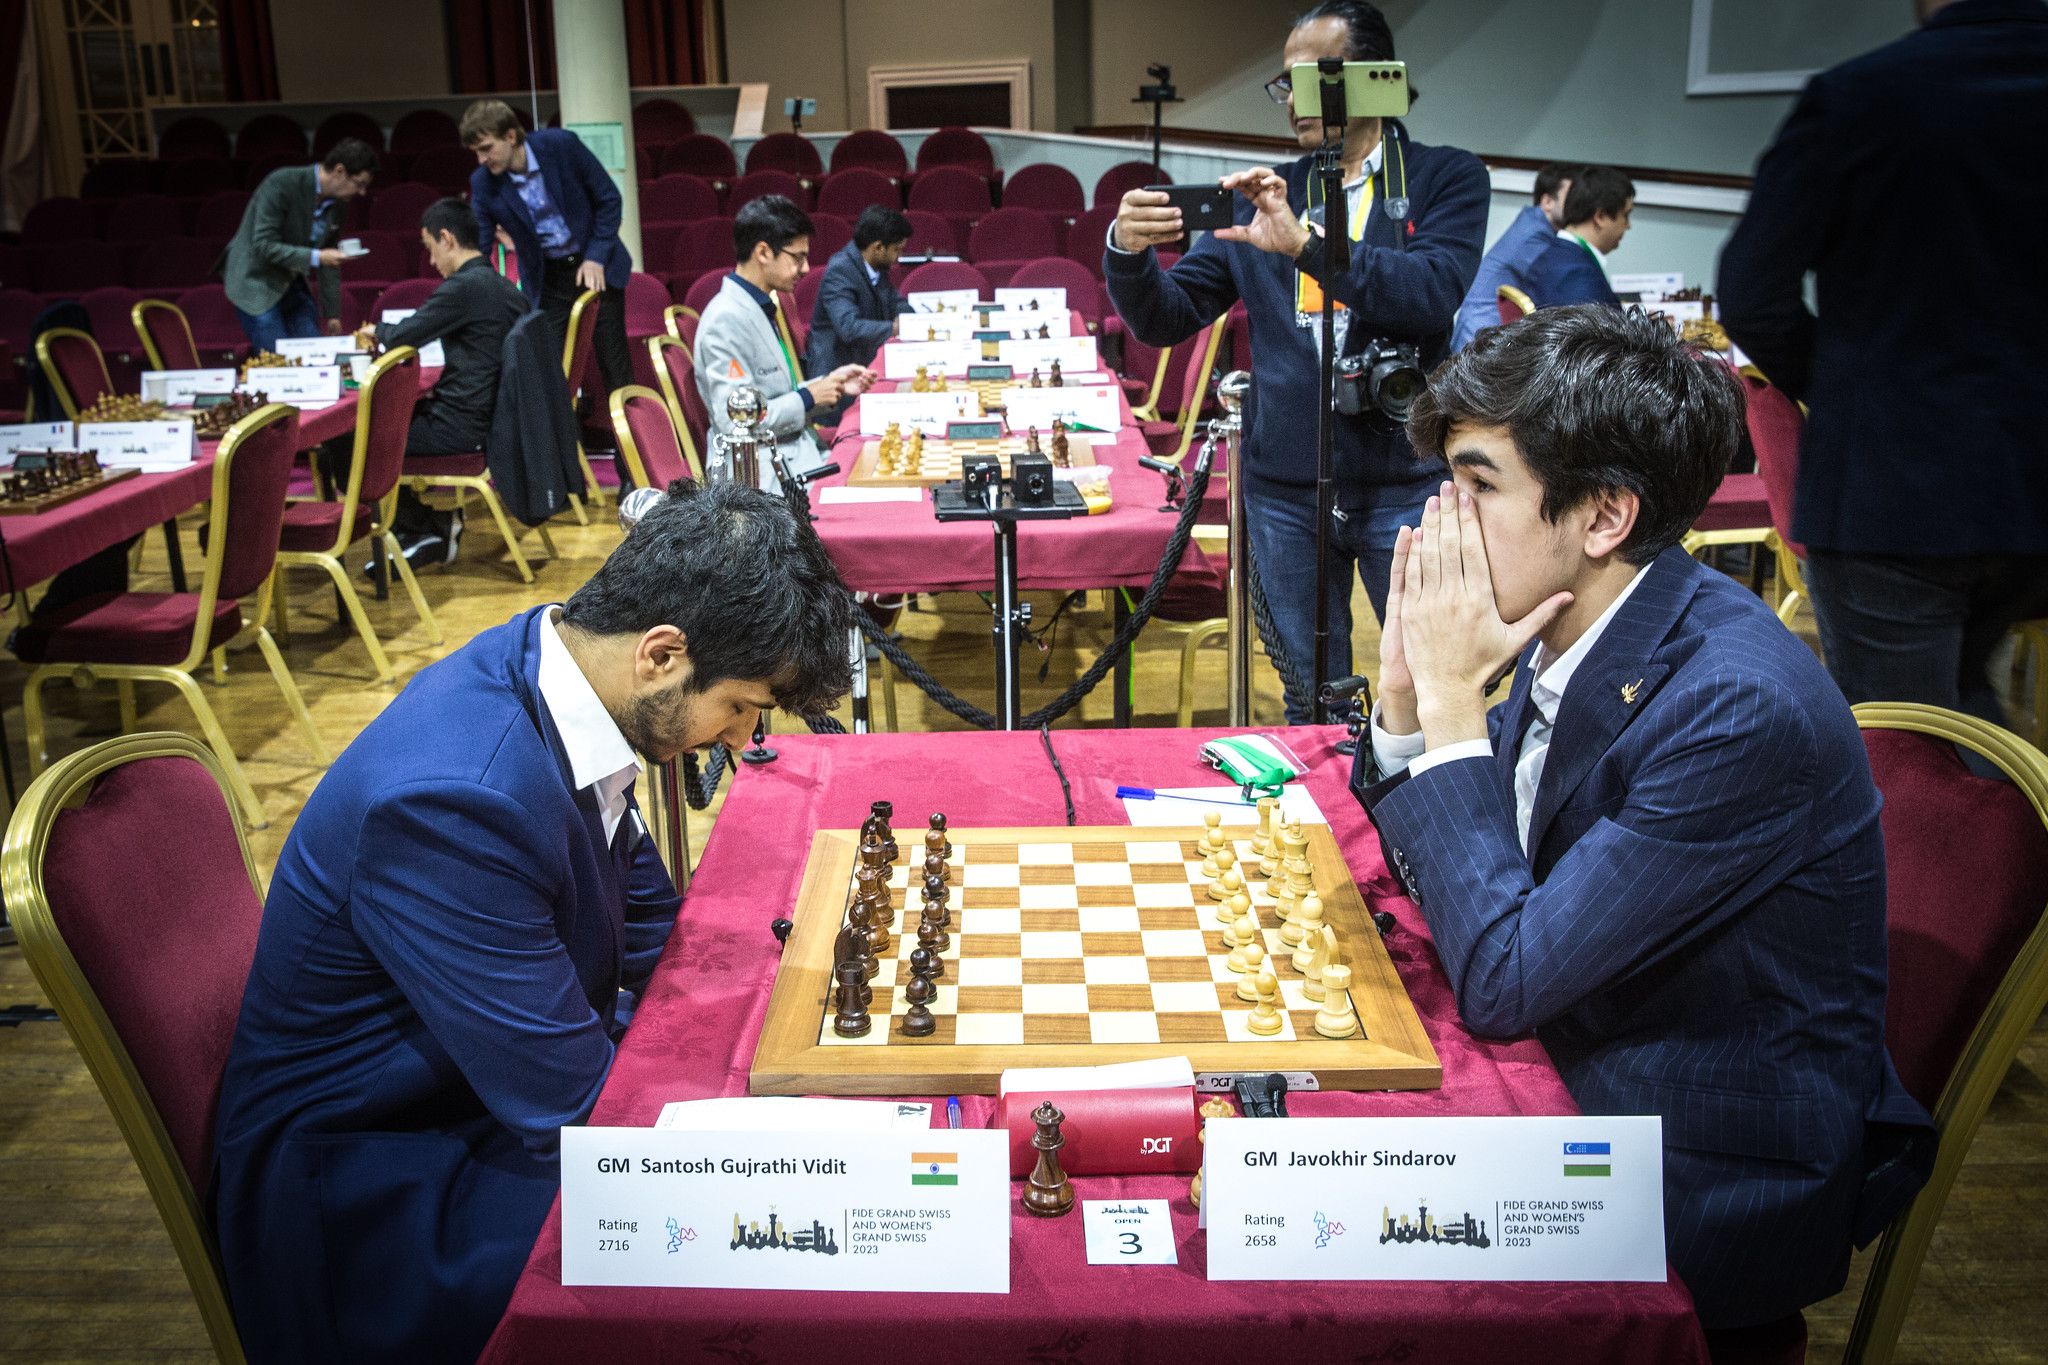 Sarana, Alexey (2682) -- Rapport, Richard (2752), FIDE Grand Swiss (8)  2023, 1-0 